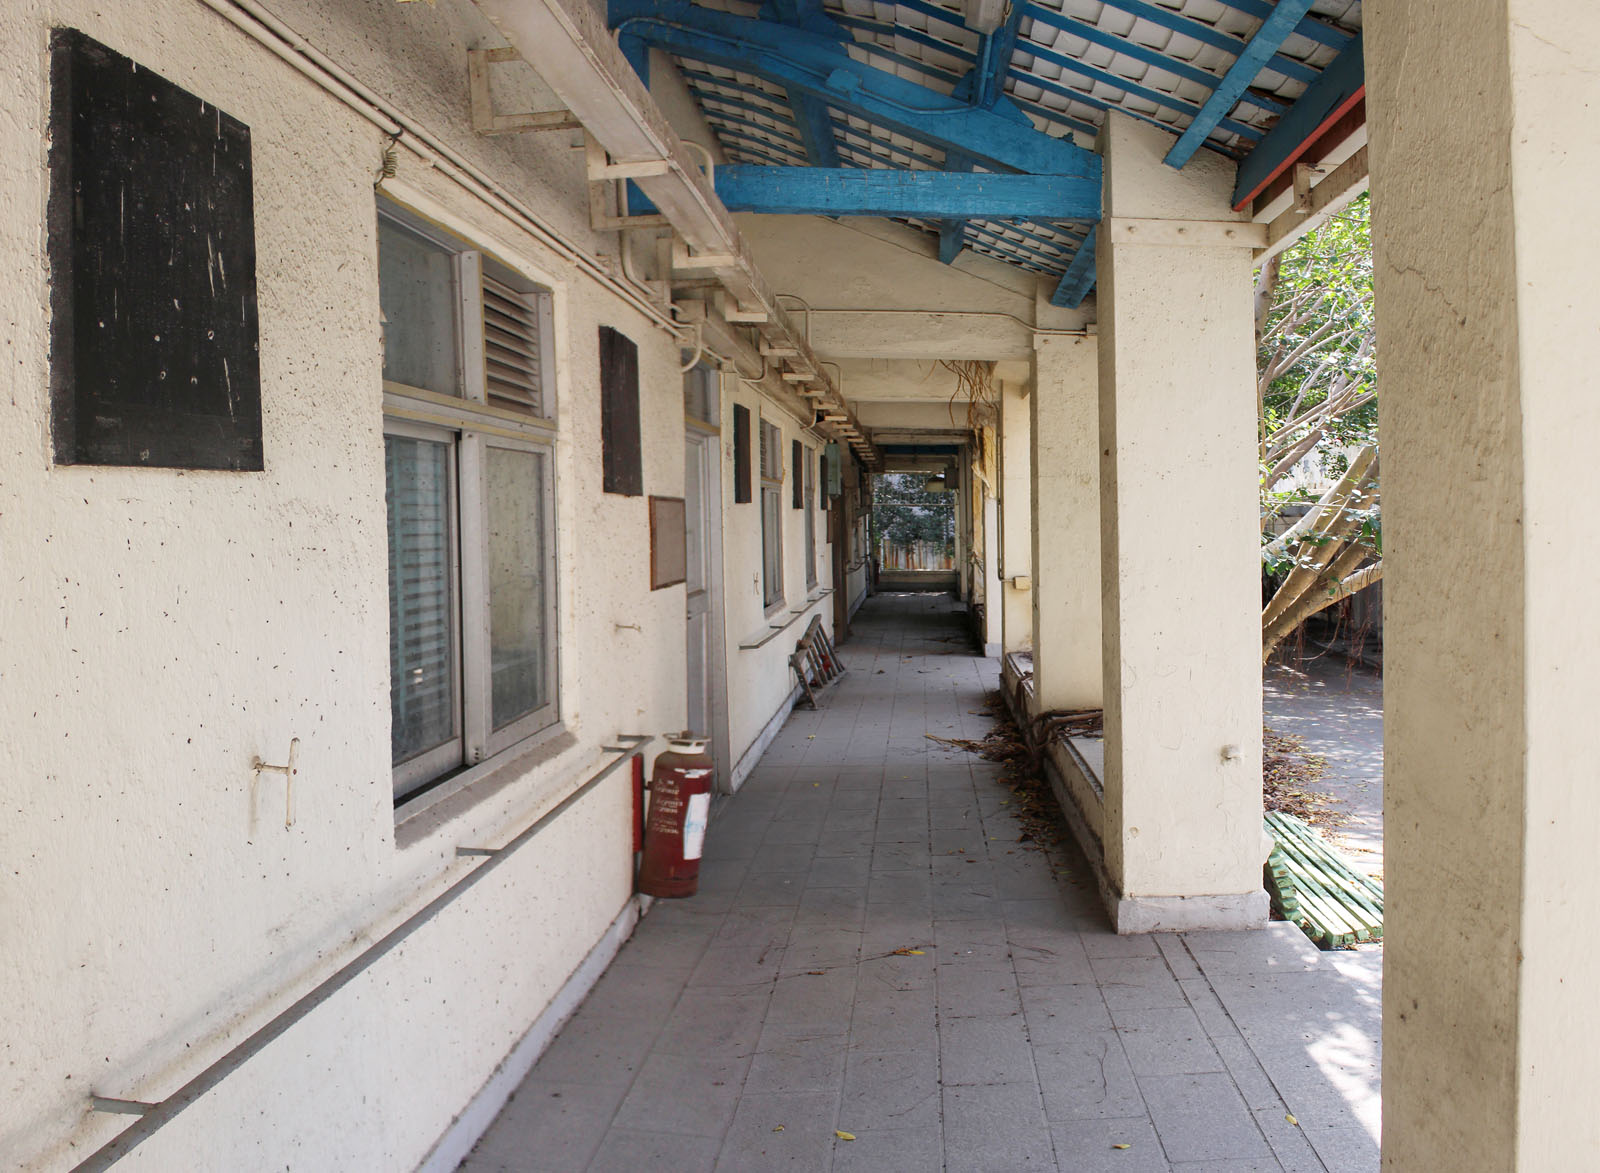 Photo 6: Former Koon Ying School